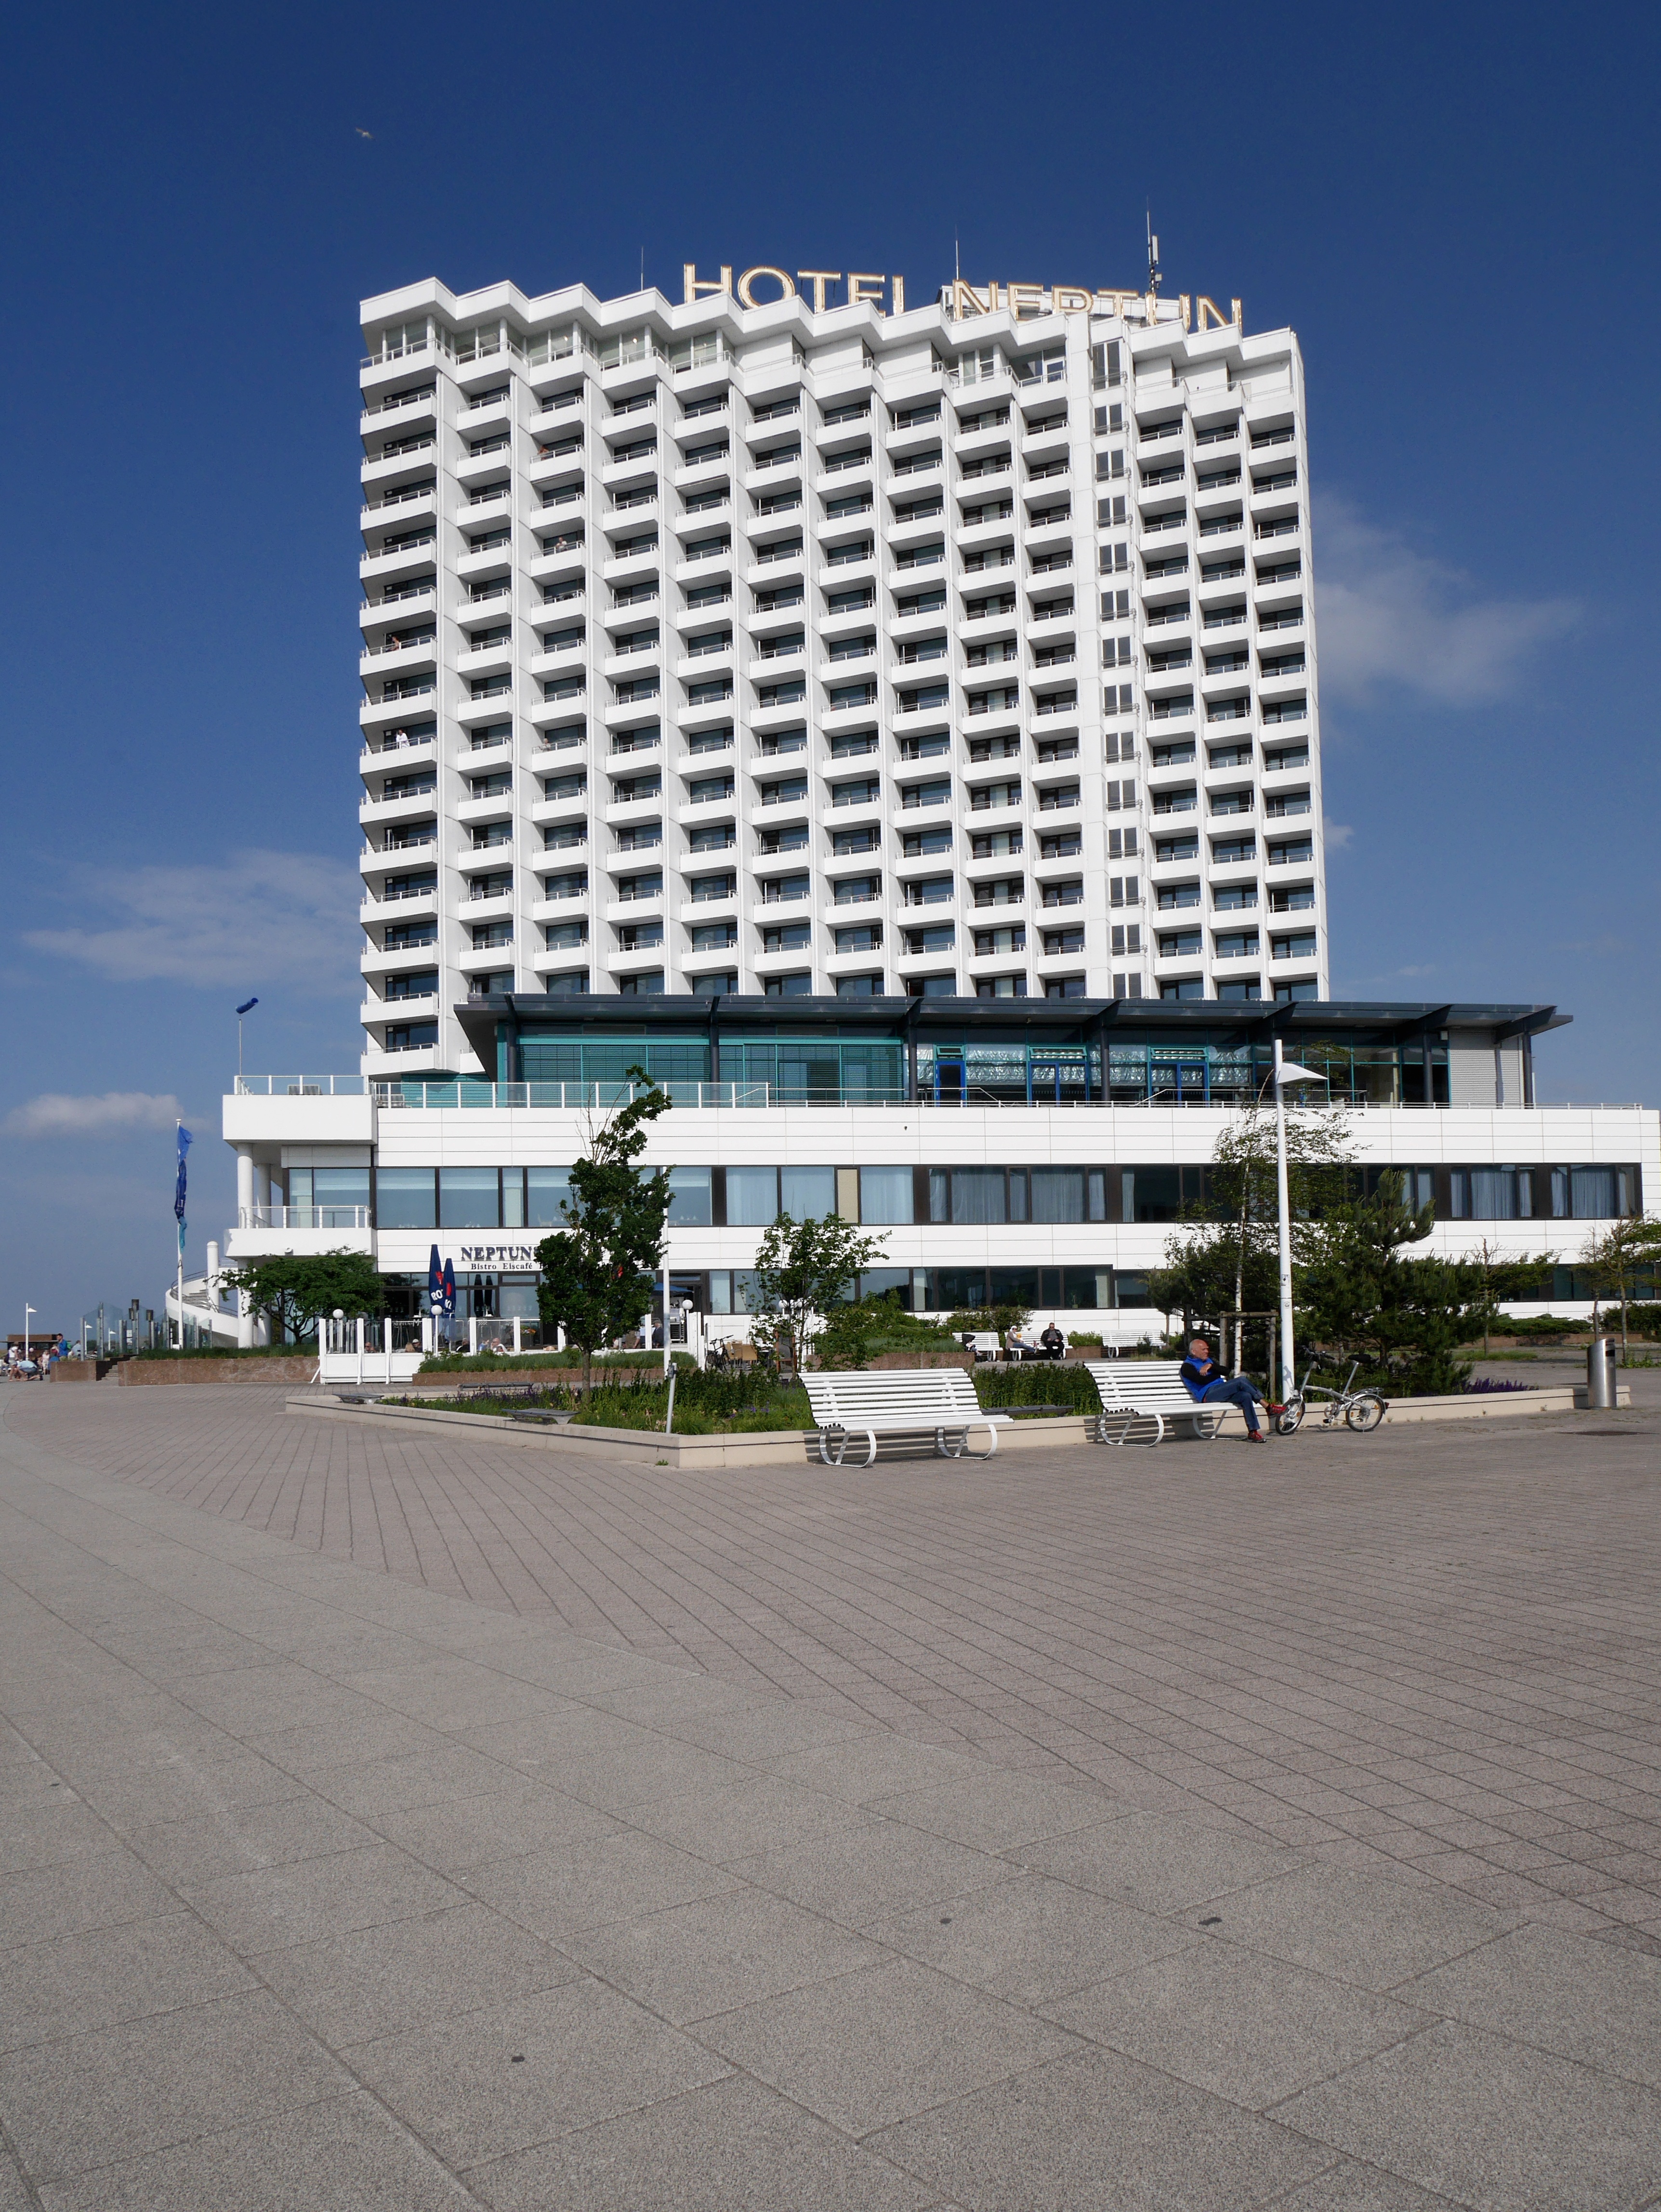 гостиница нептун в санкт петербурге